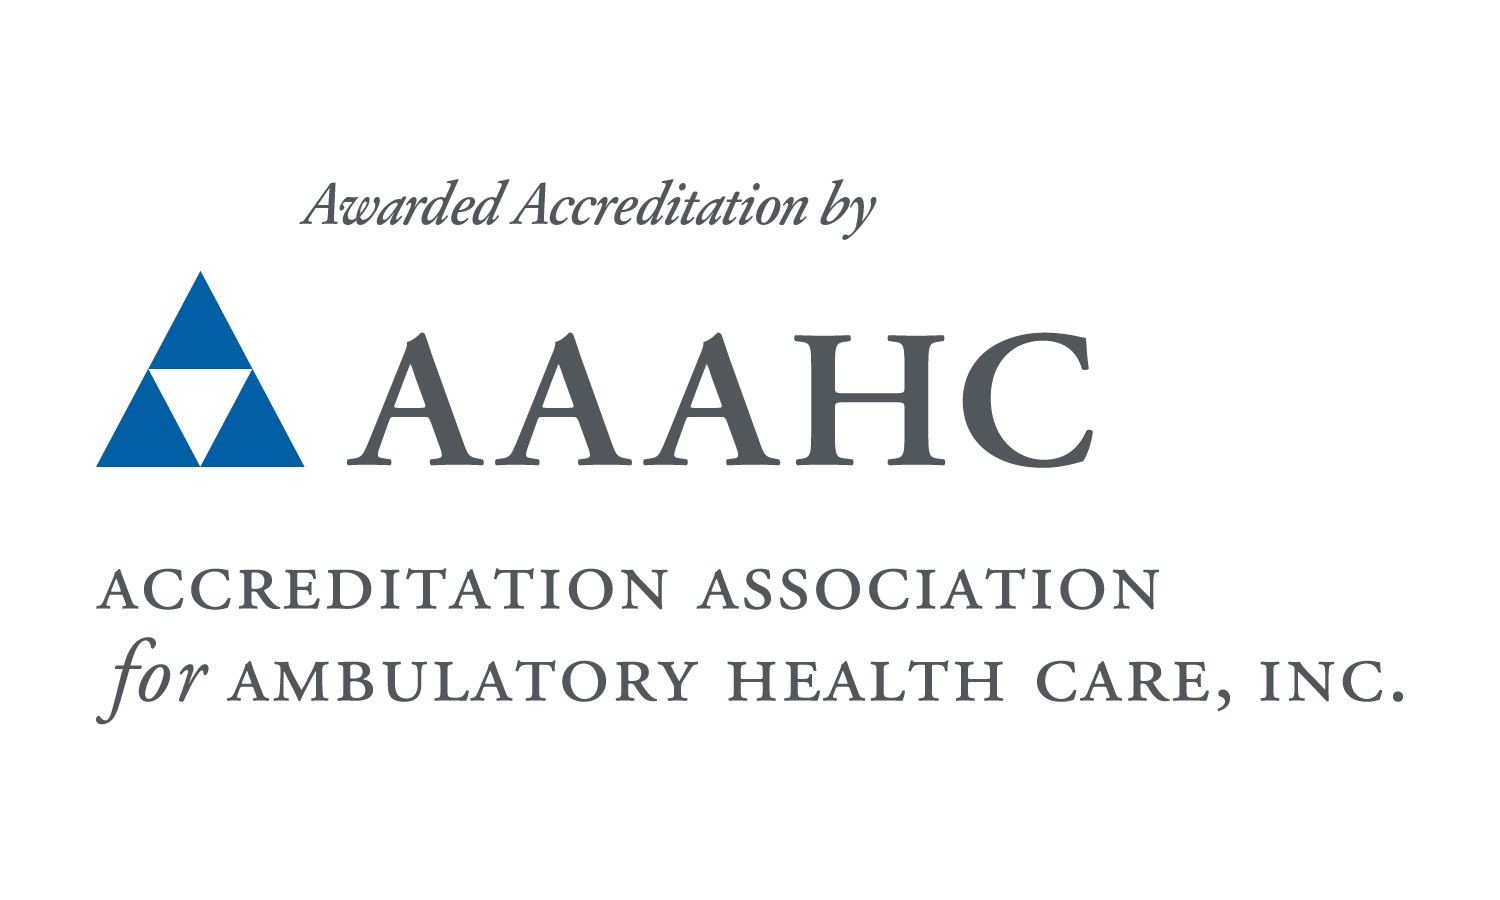 Accreditation association for ambulatory health care inc. AAAHC Accreditation logo 